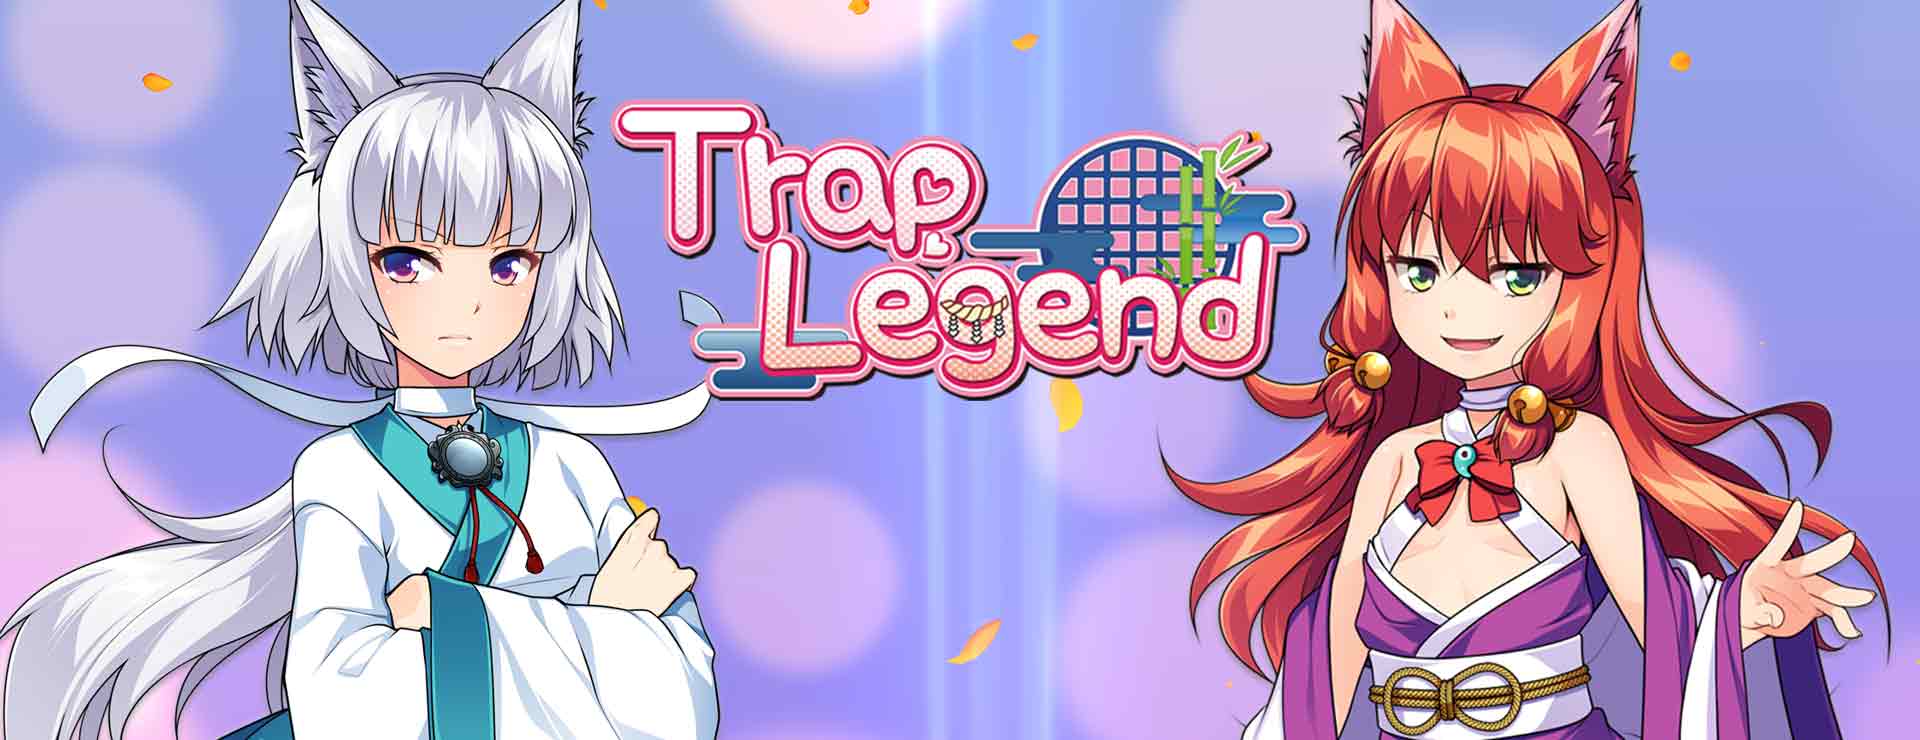 Trap Legend - Novela Visual Juego